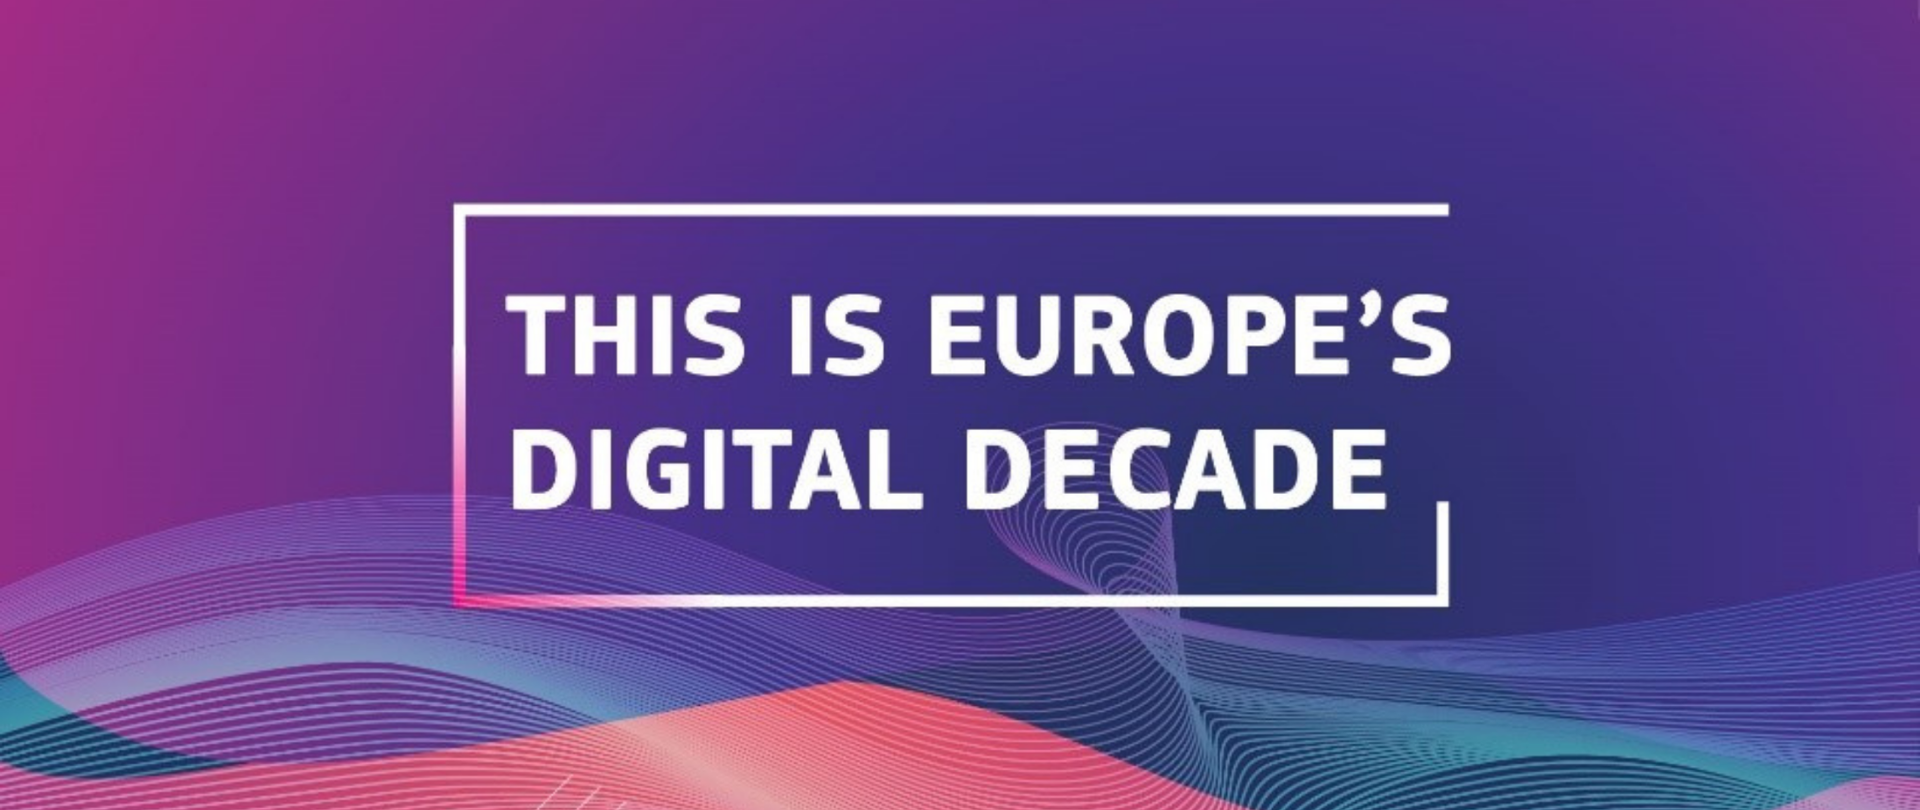 Biały tekst na fioletowo-różowym tle: This is Europe's digital decade.